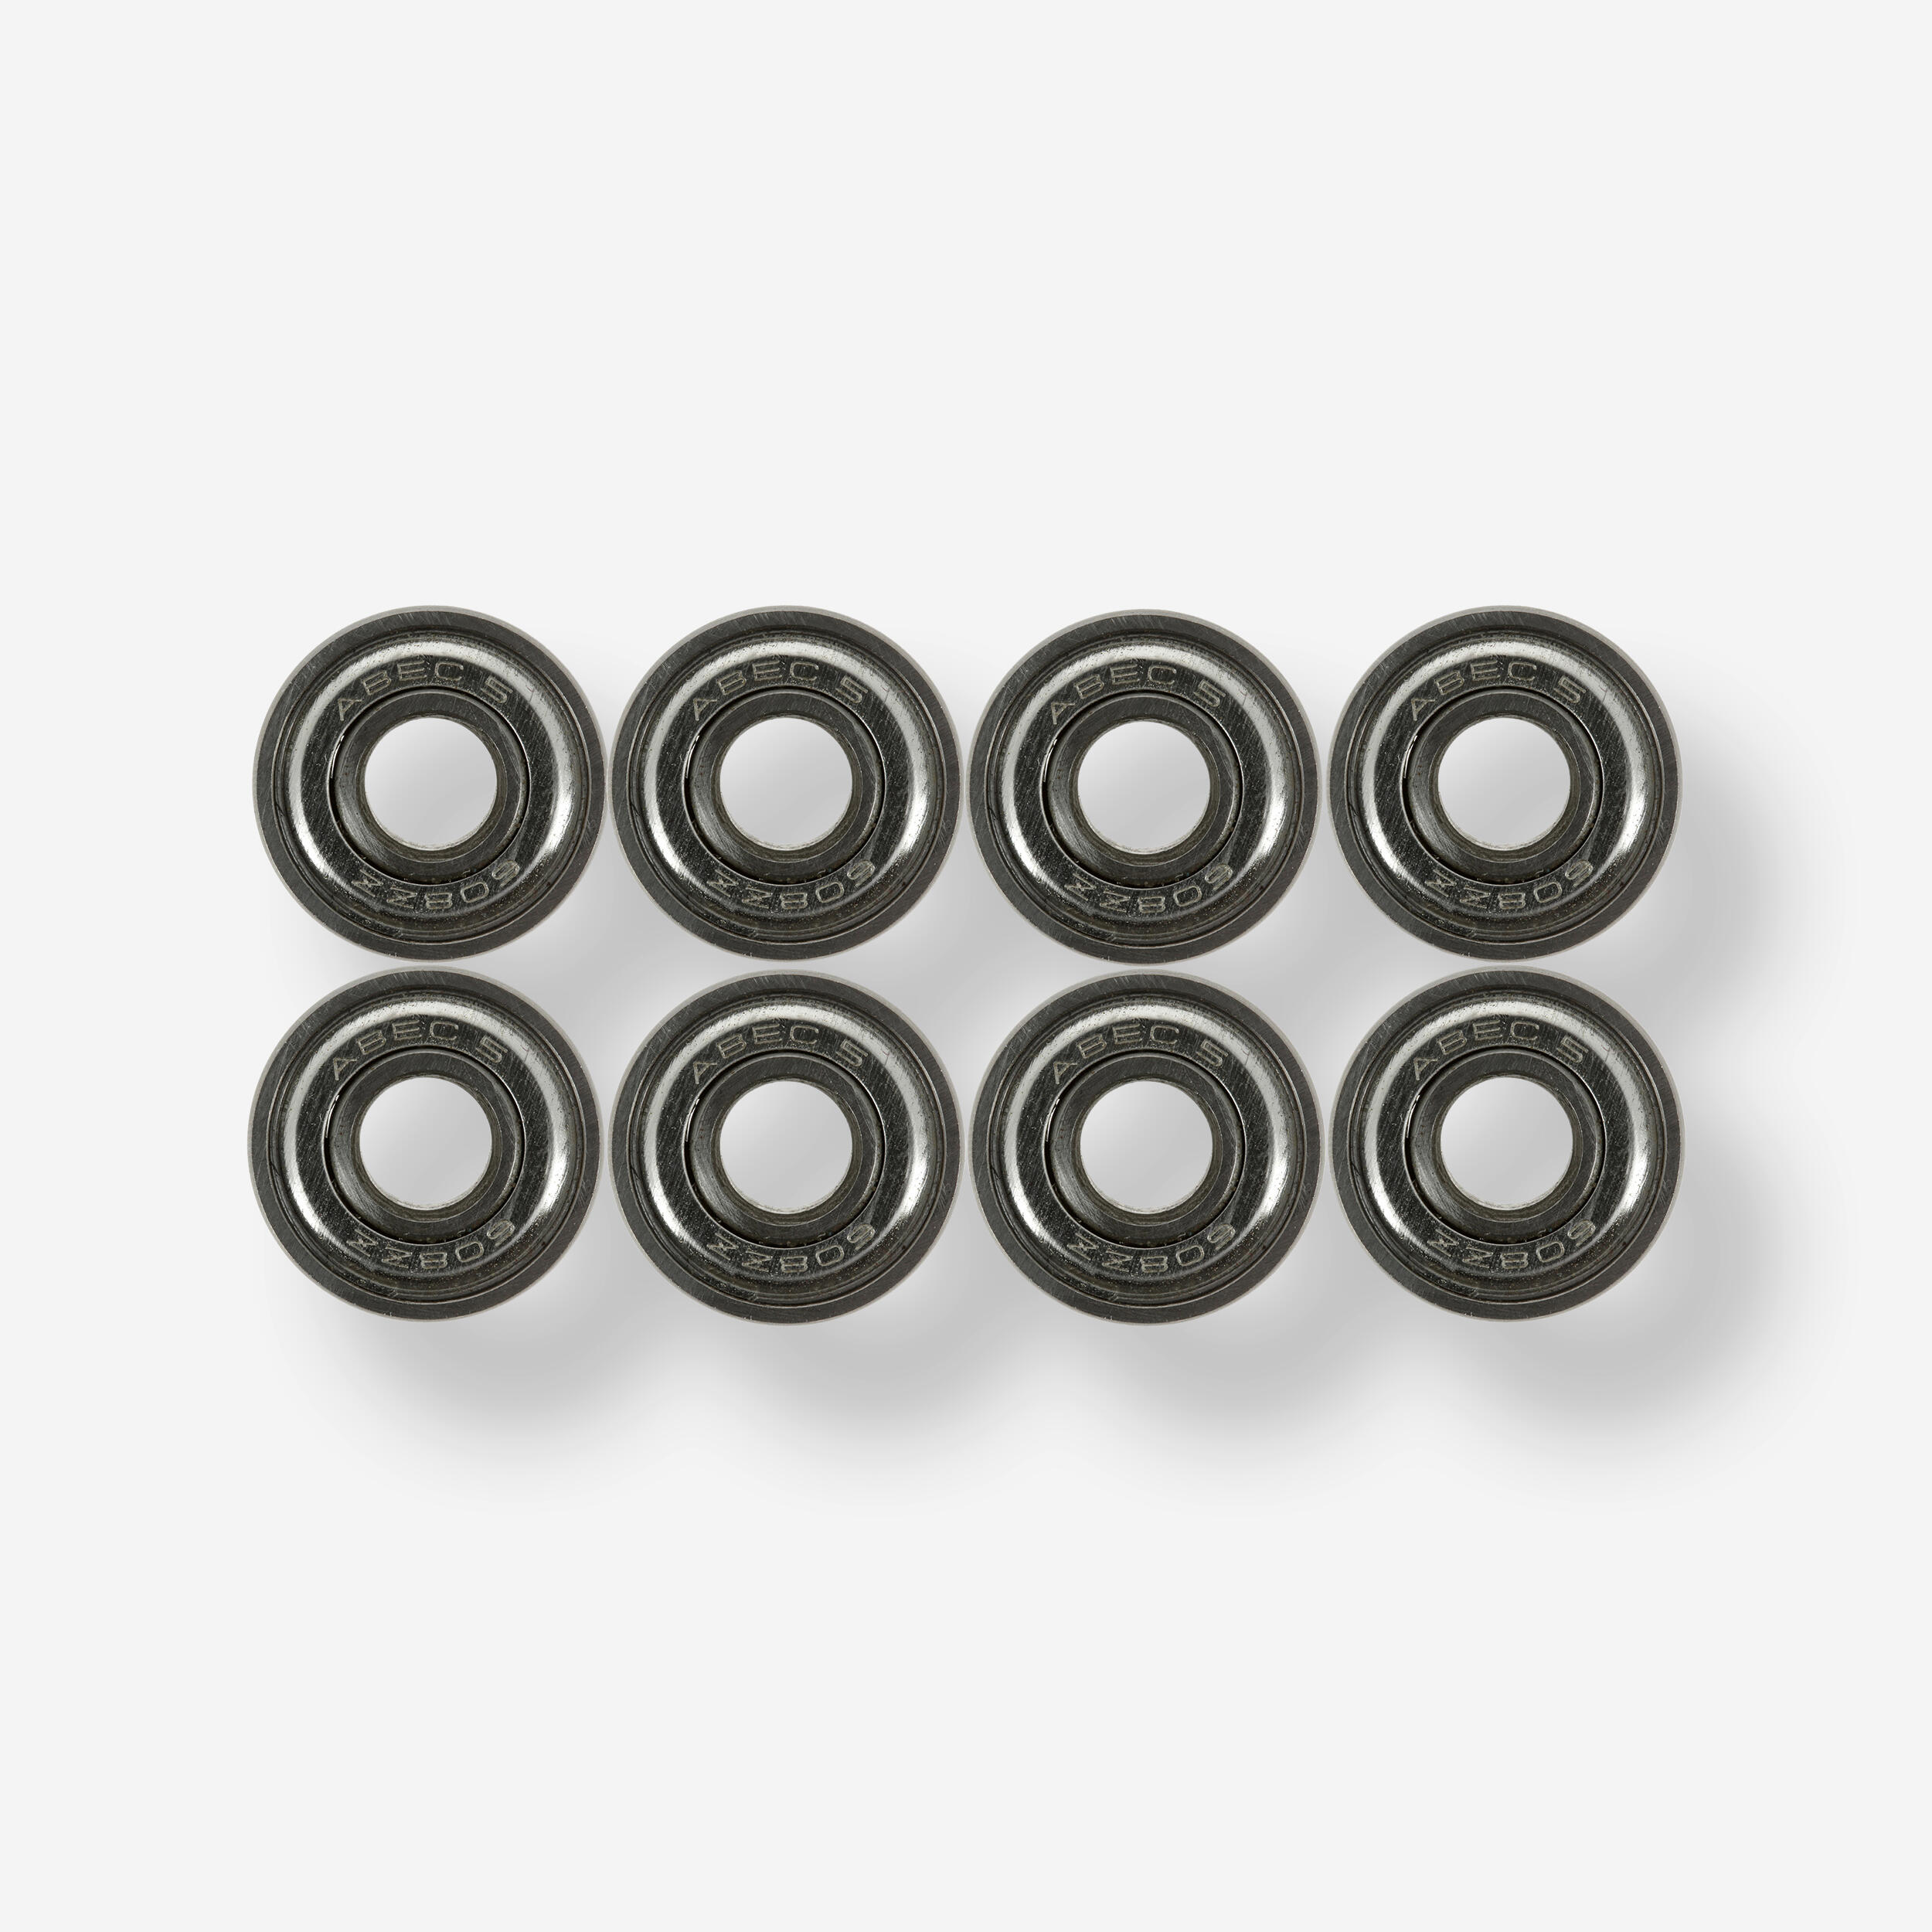 Image of ABEC 5 roller sport bearings, 8-pack